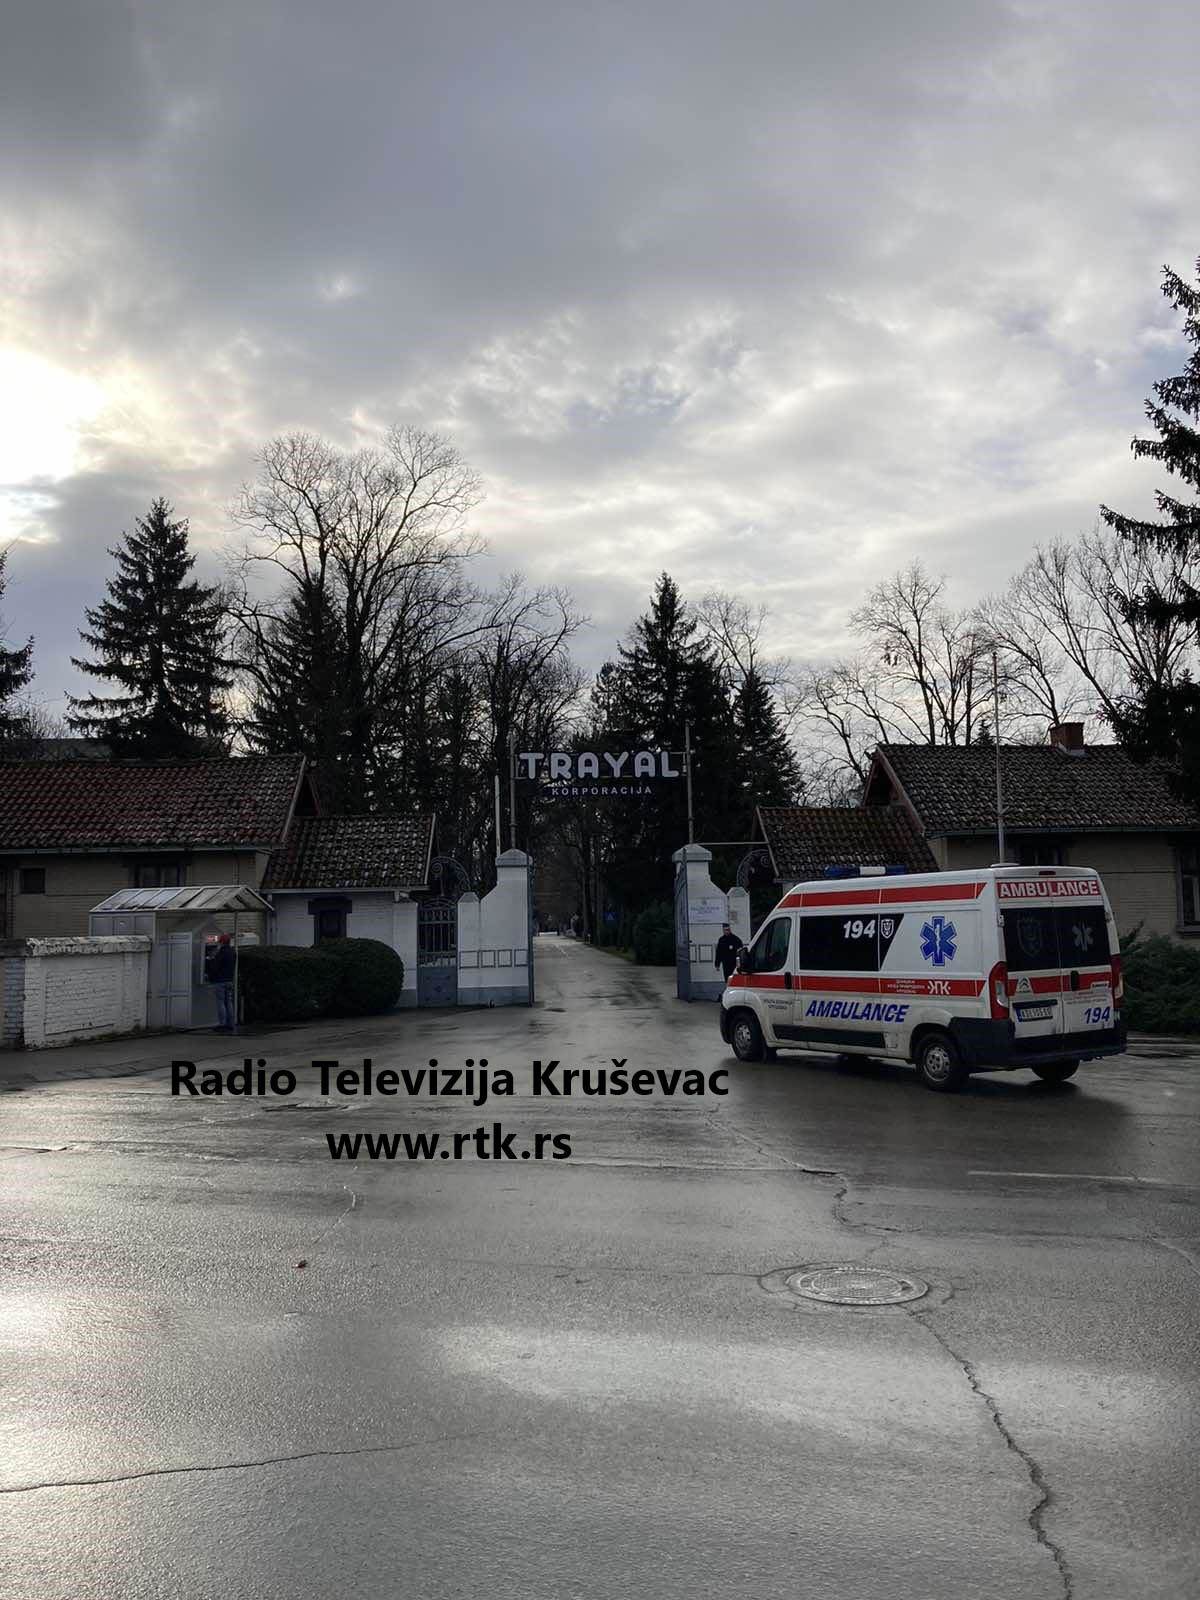  Prve fotografije fabrike Trajal u Kruševcu nakon eksplozije 